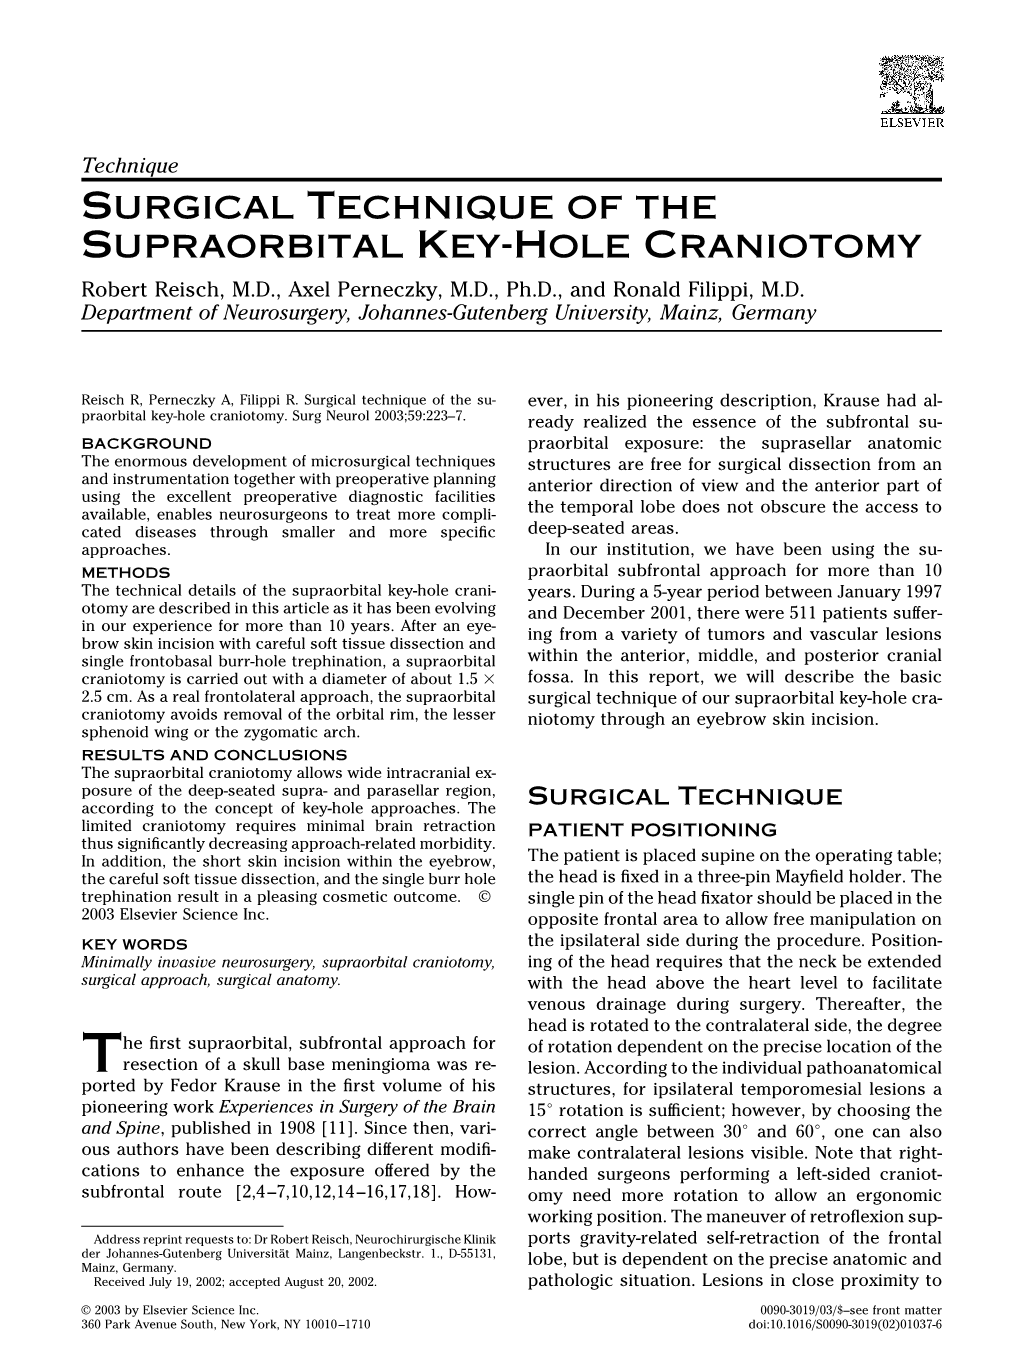 Surgical Technique of the Supraorbital Key-Hole Craniotomy